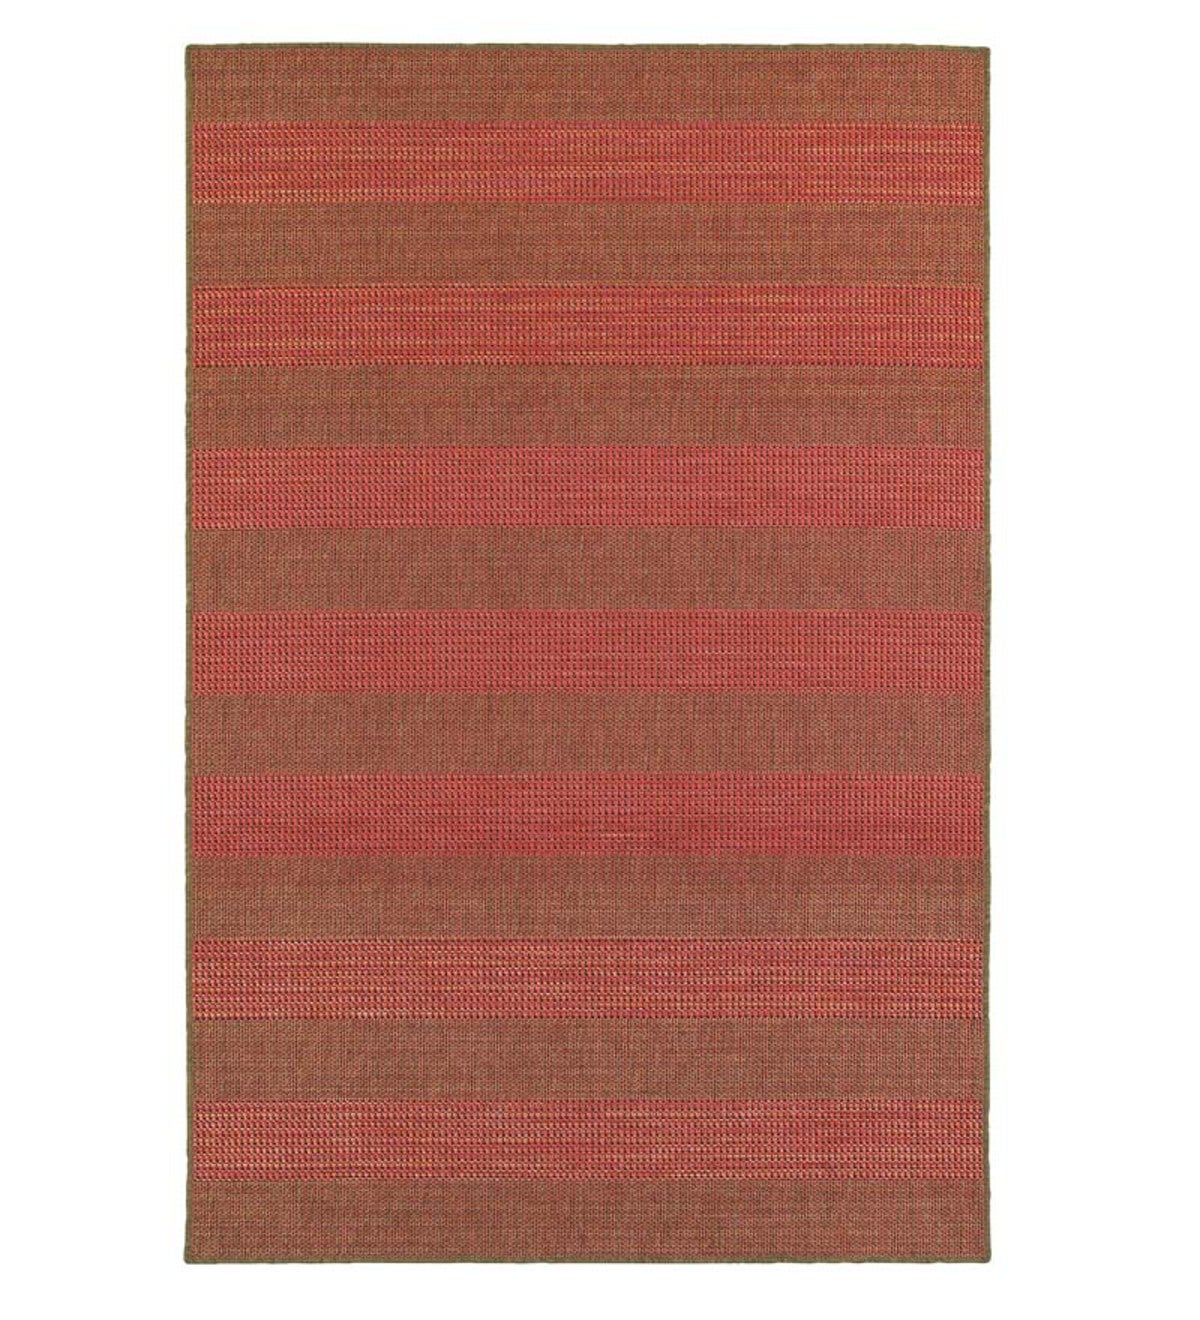 Elements Striped Indoor/Outdoor Rug, 5'3”x 7'6” - Red/Tan